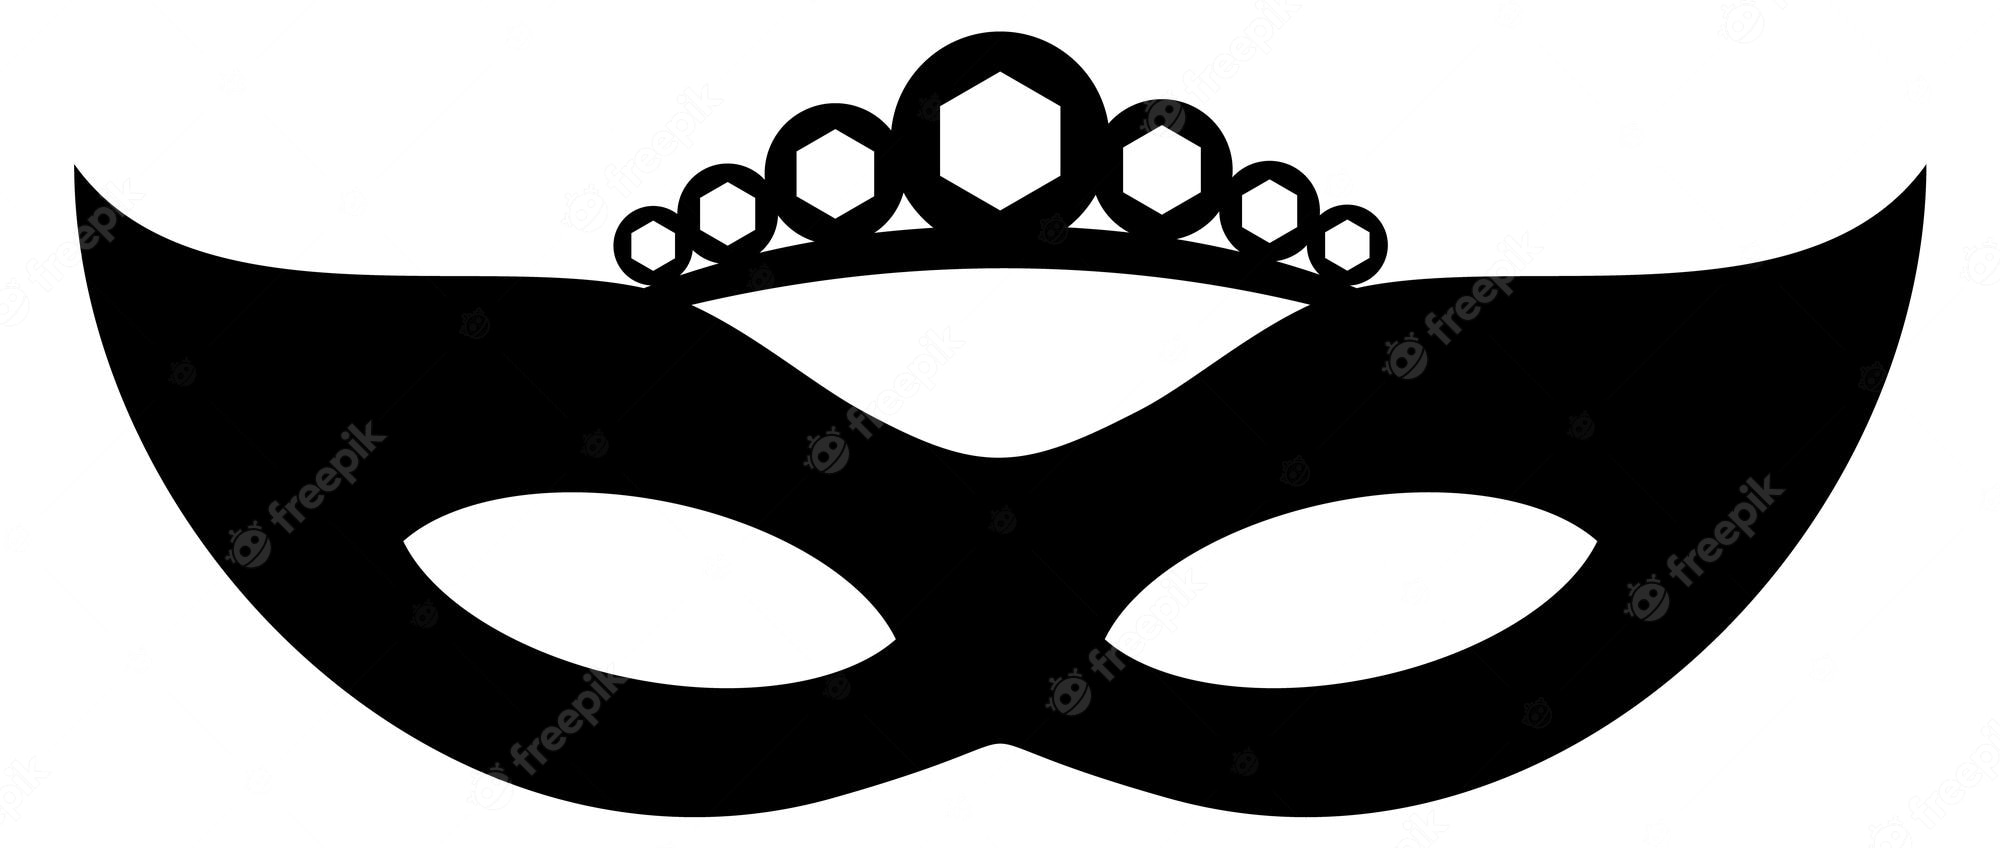 mardi gras crown clip art black and white